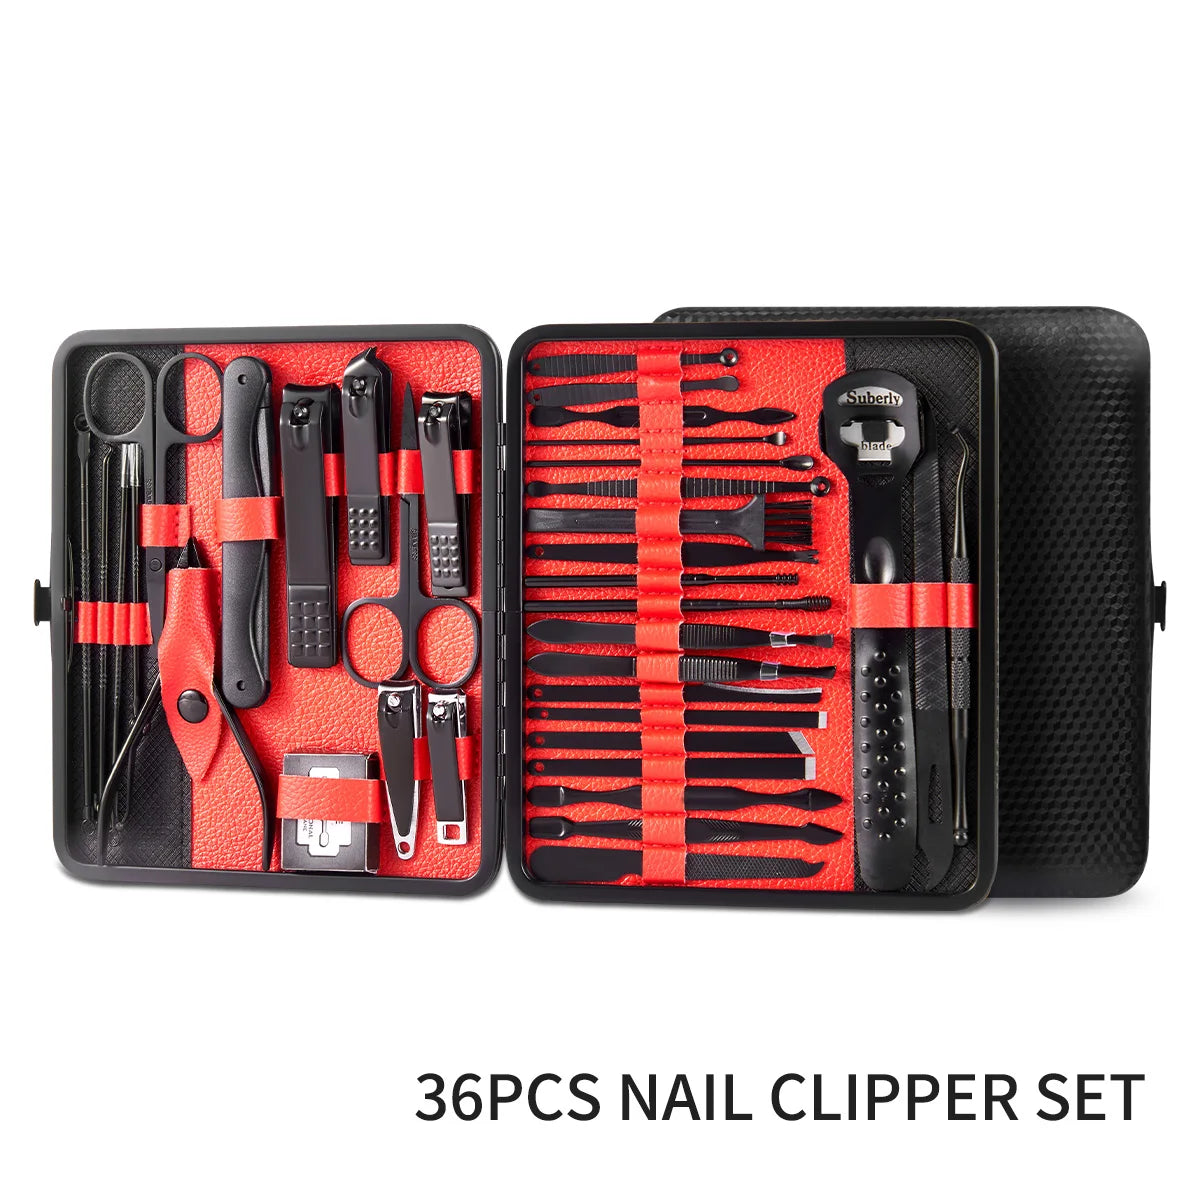 grooming kit, nail clippers, grooming set, manicure tool set, nail grooming kit, nail tool, nail clippers set, clippers kit, men grooming kit, nail kit, manicure tool